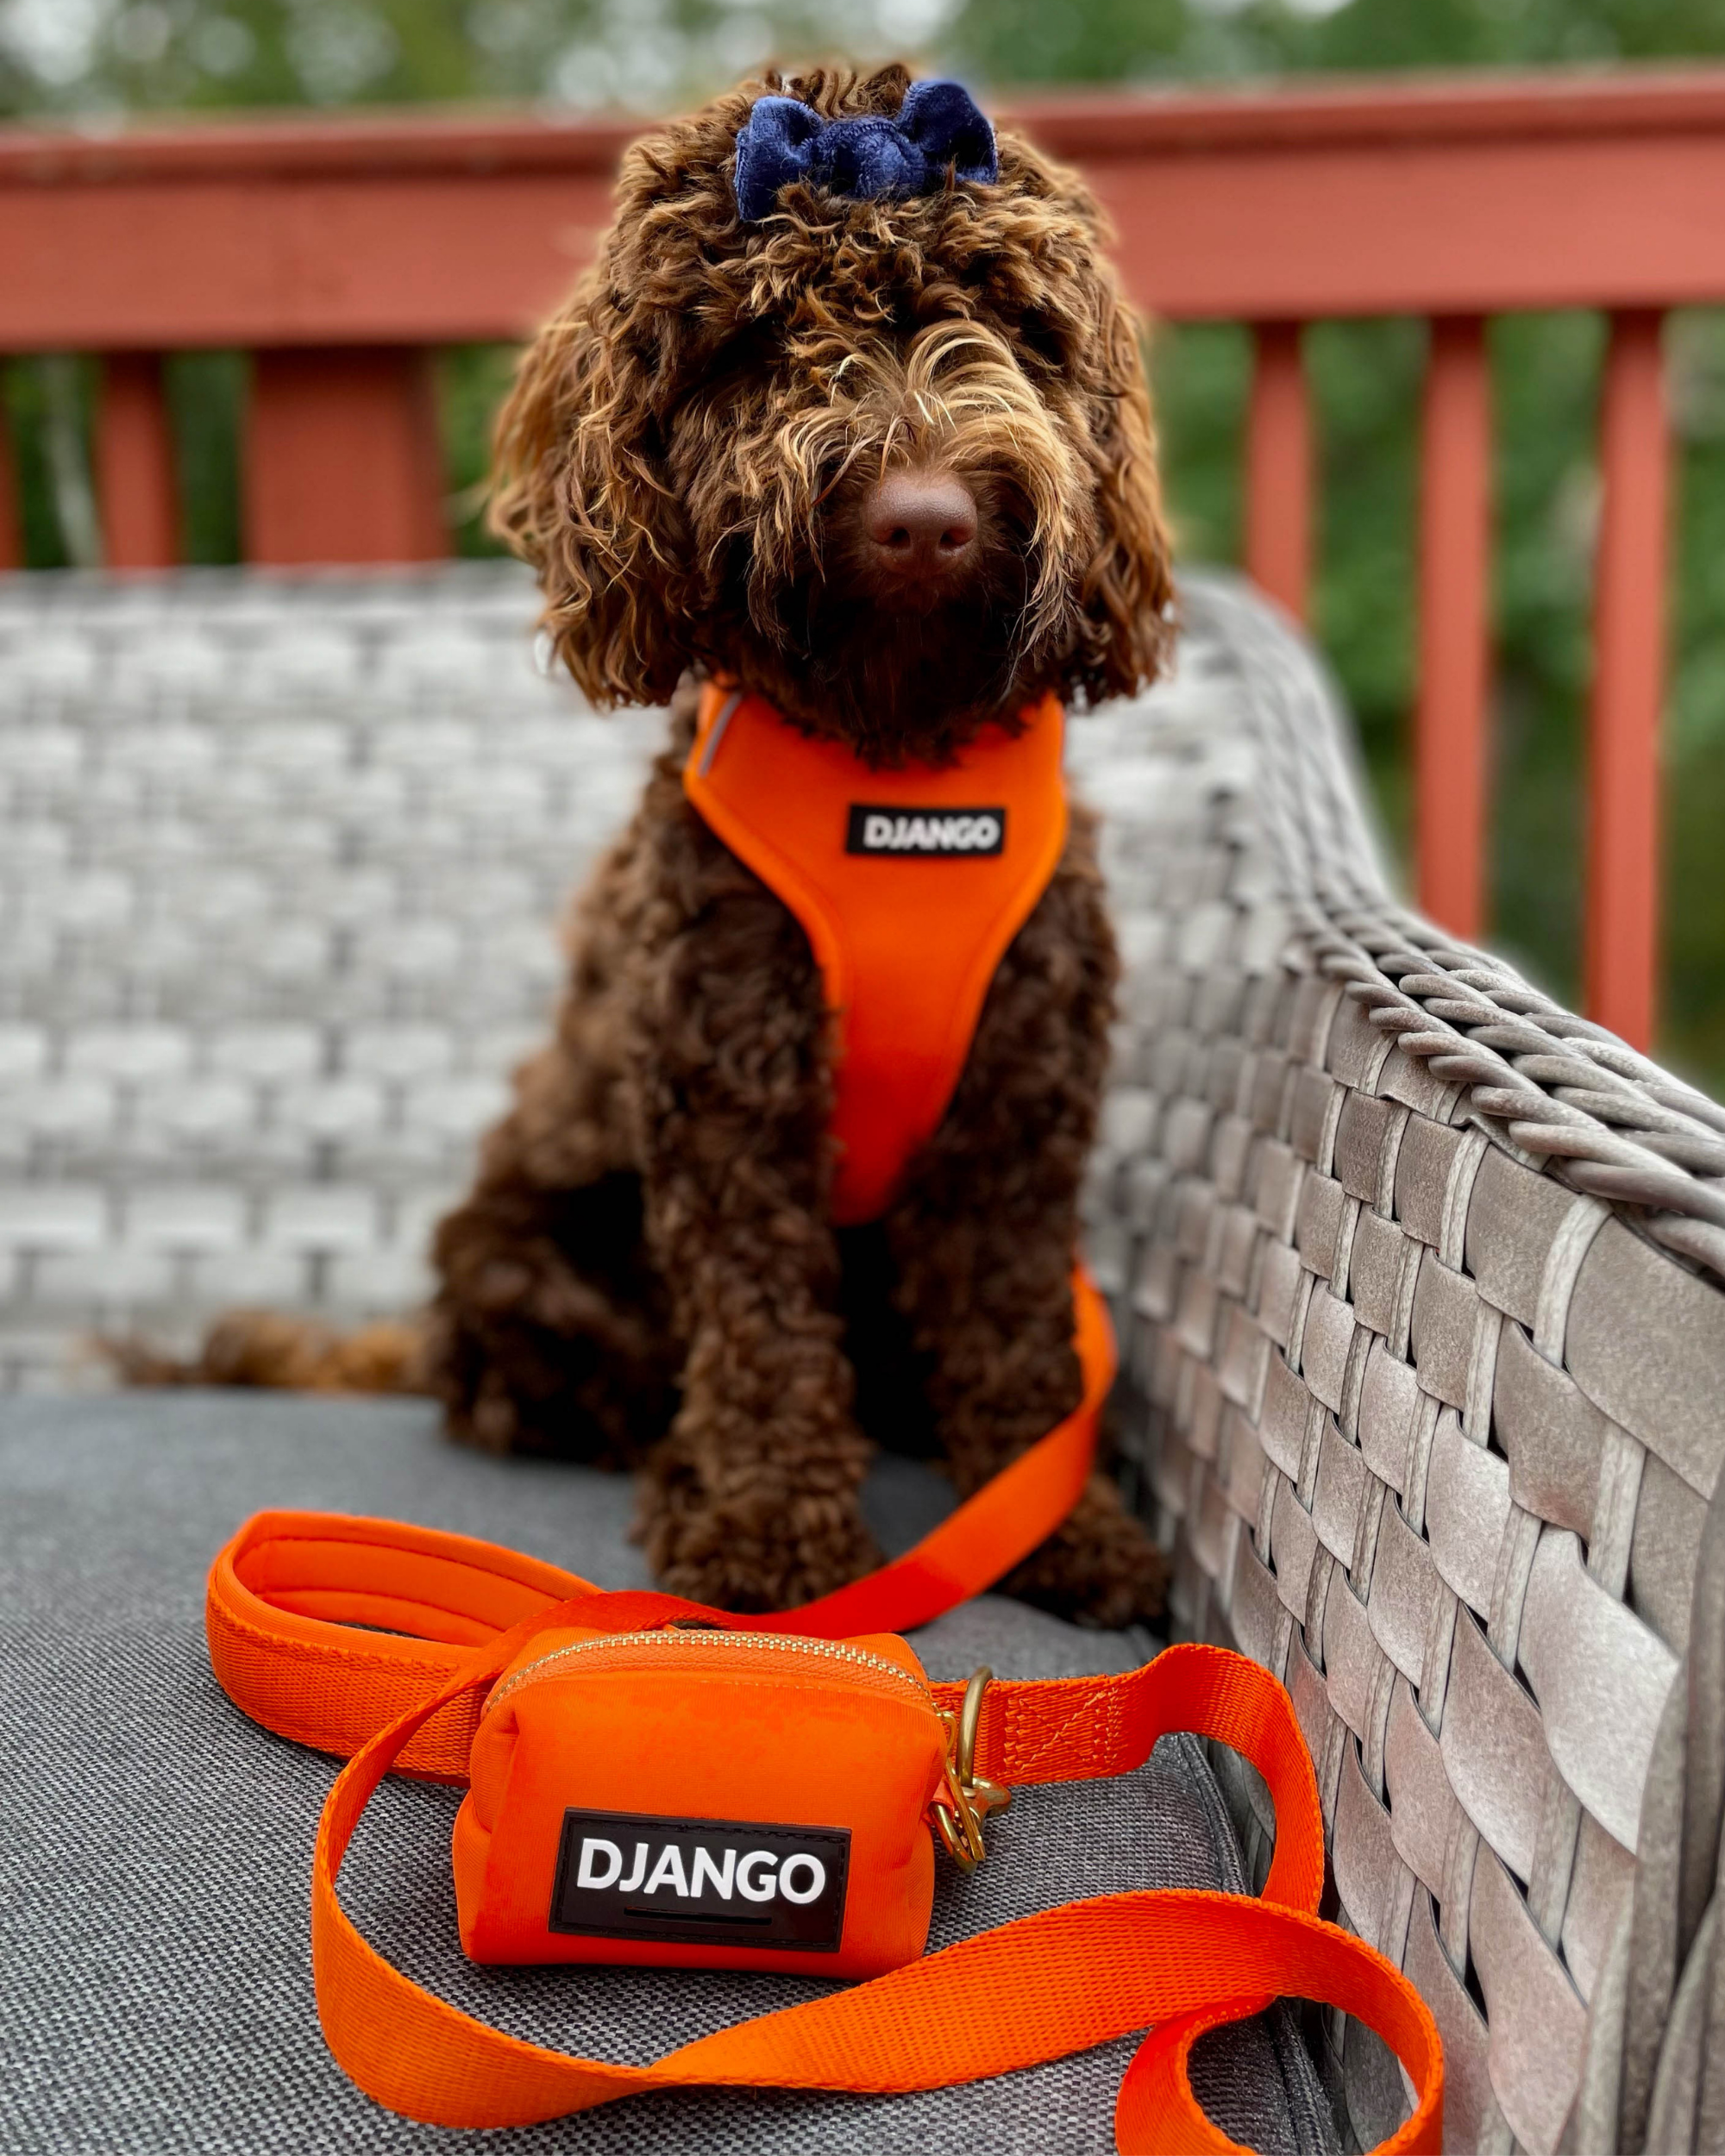 DJANGO Dog Waste Bag Holder on beautiful Doodle puppy dog Mocha - Chic and classy poop bag holder for dogs - Sunset Orange neoprene with solid brass hardware - djangobrand.com